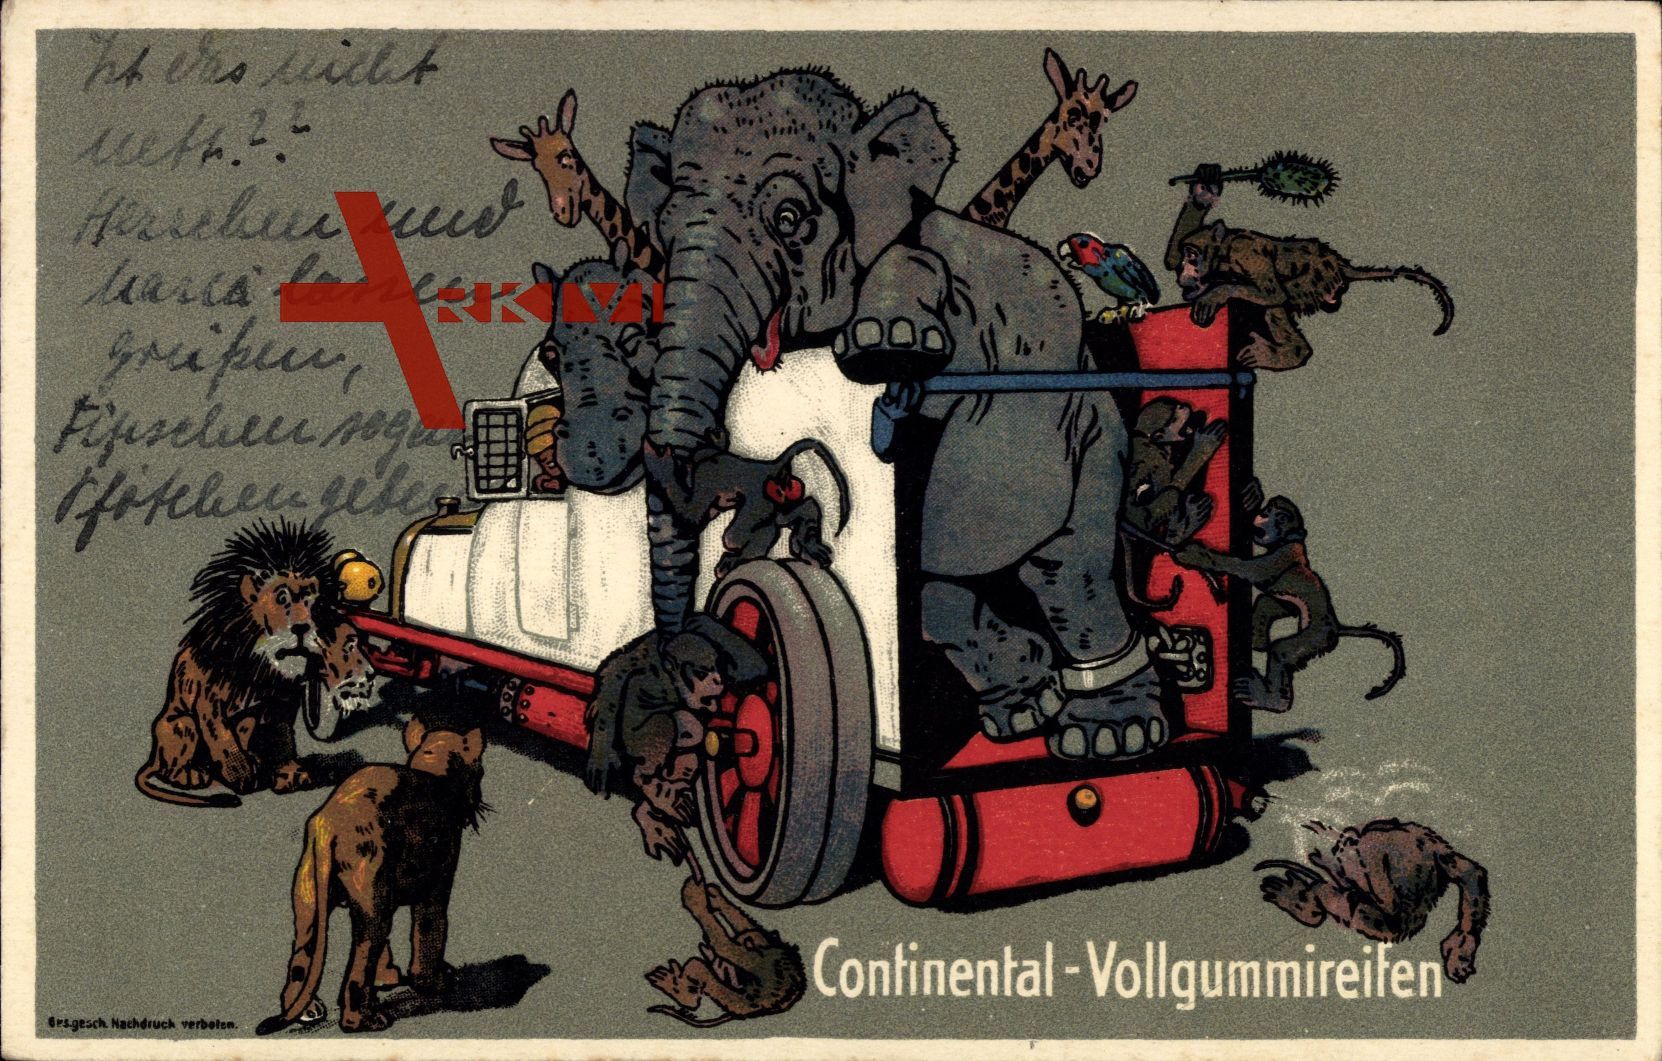 Continental Vollgummireifen, Elefant, LKW, Giraffen, Reklame